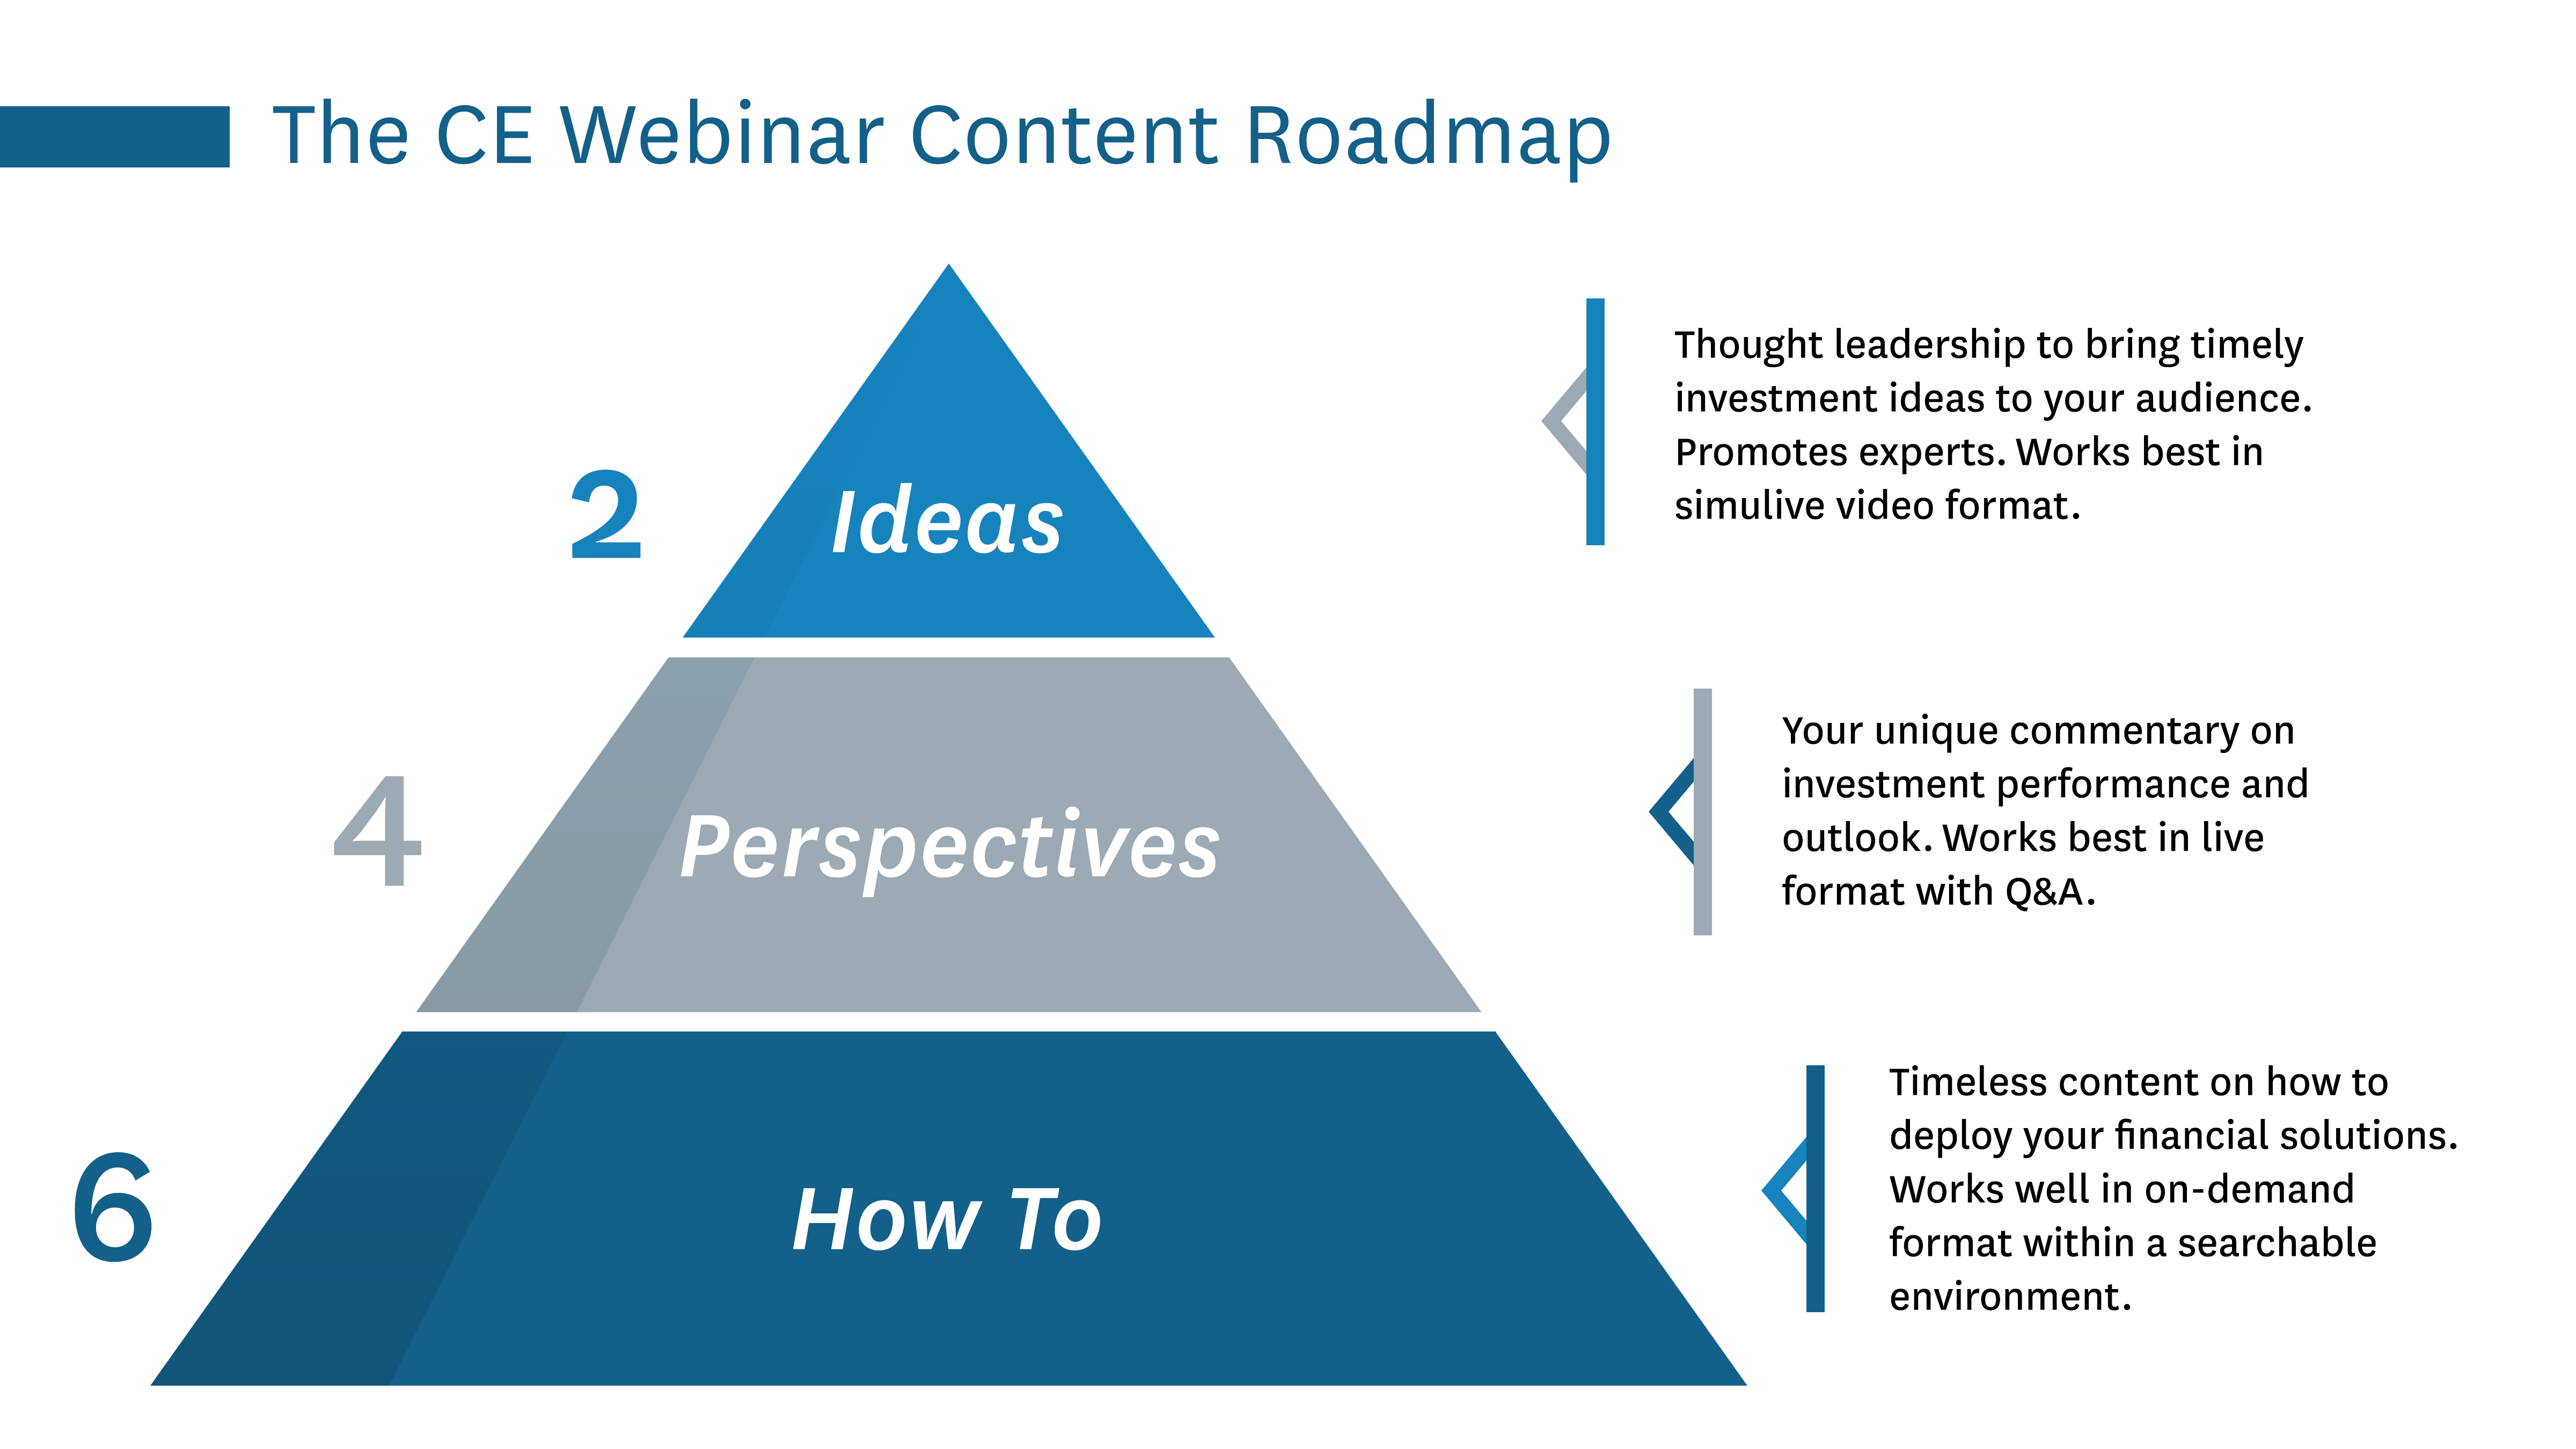 The CE Webinar Content Roadmap